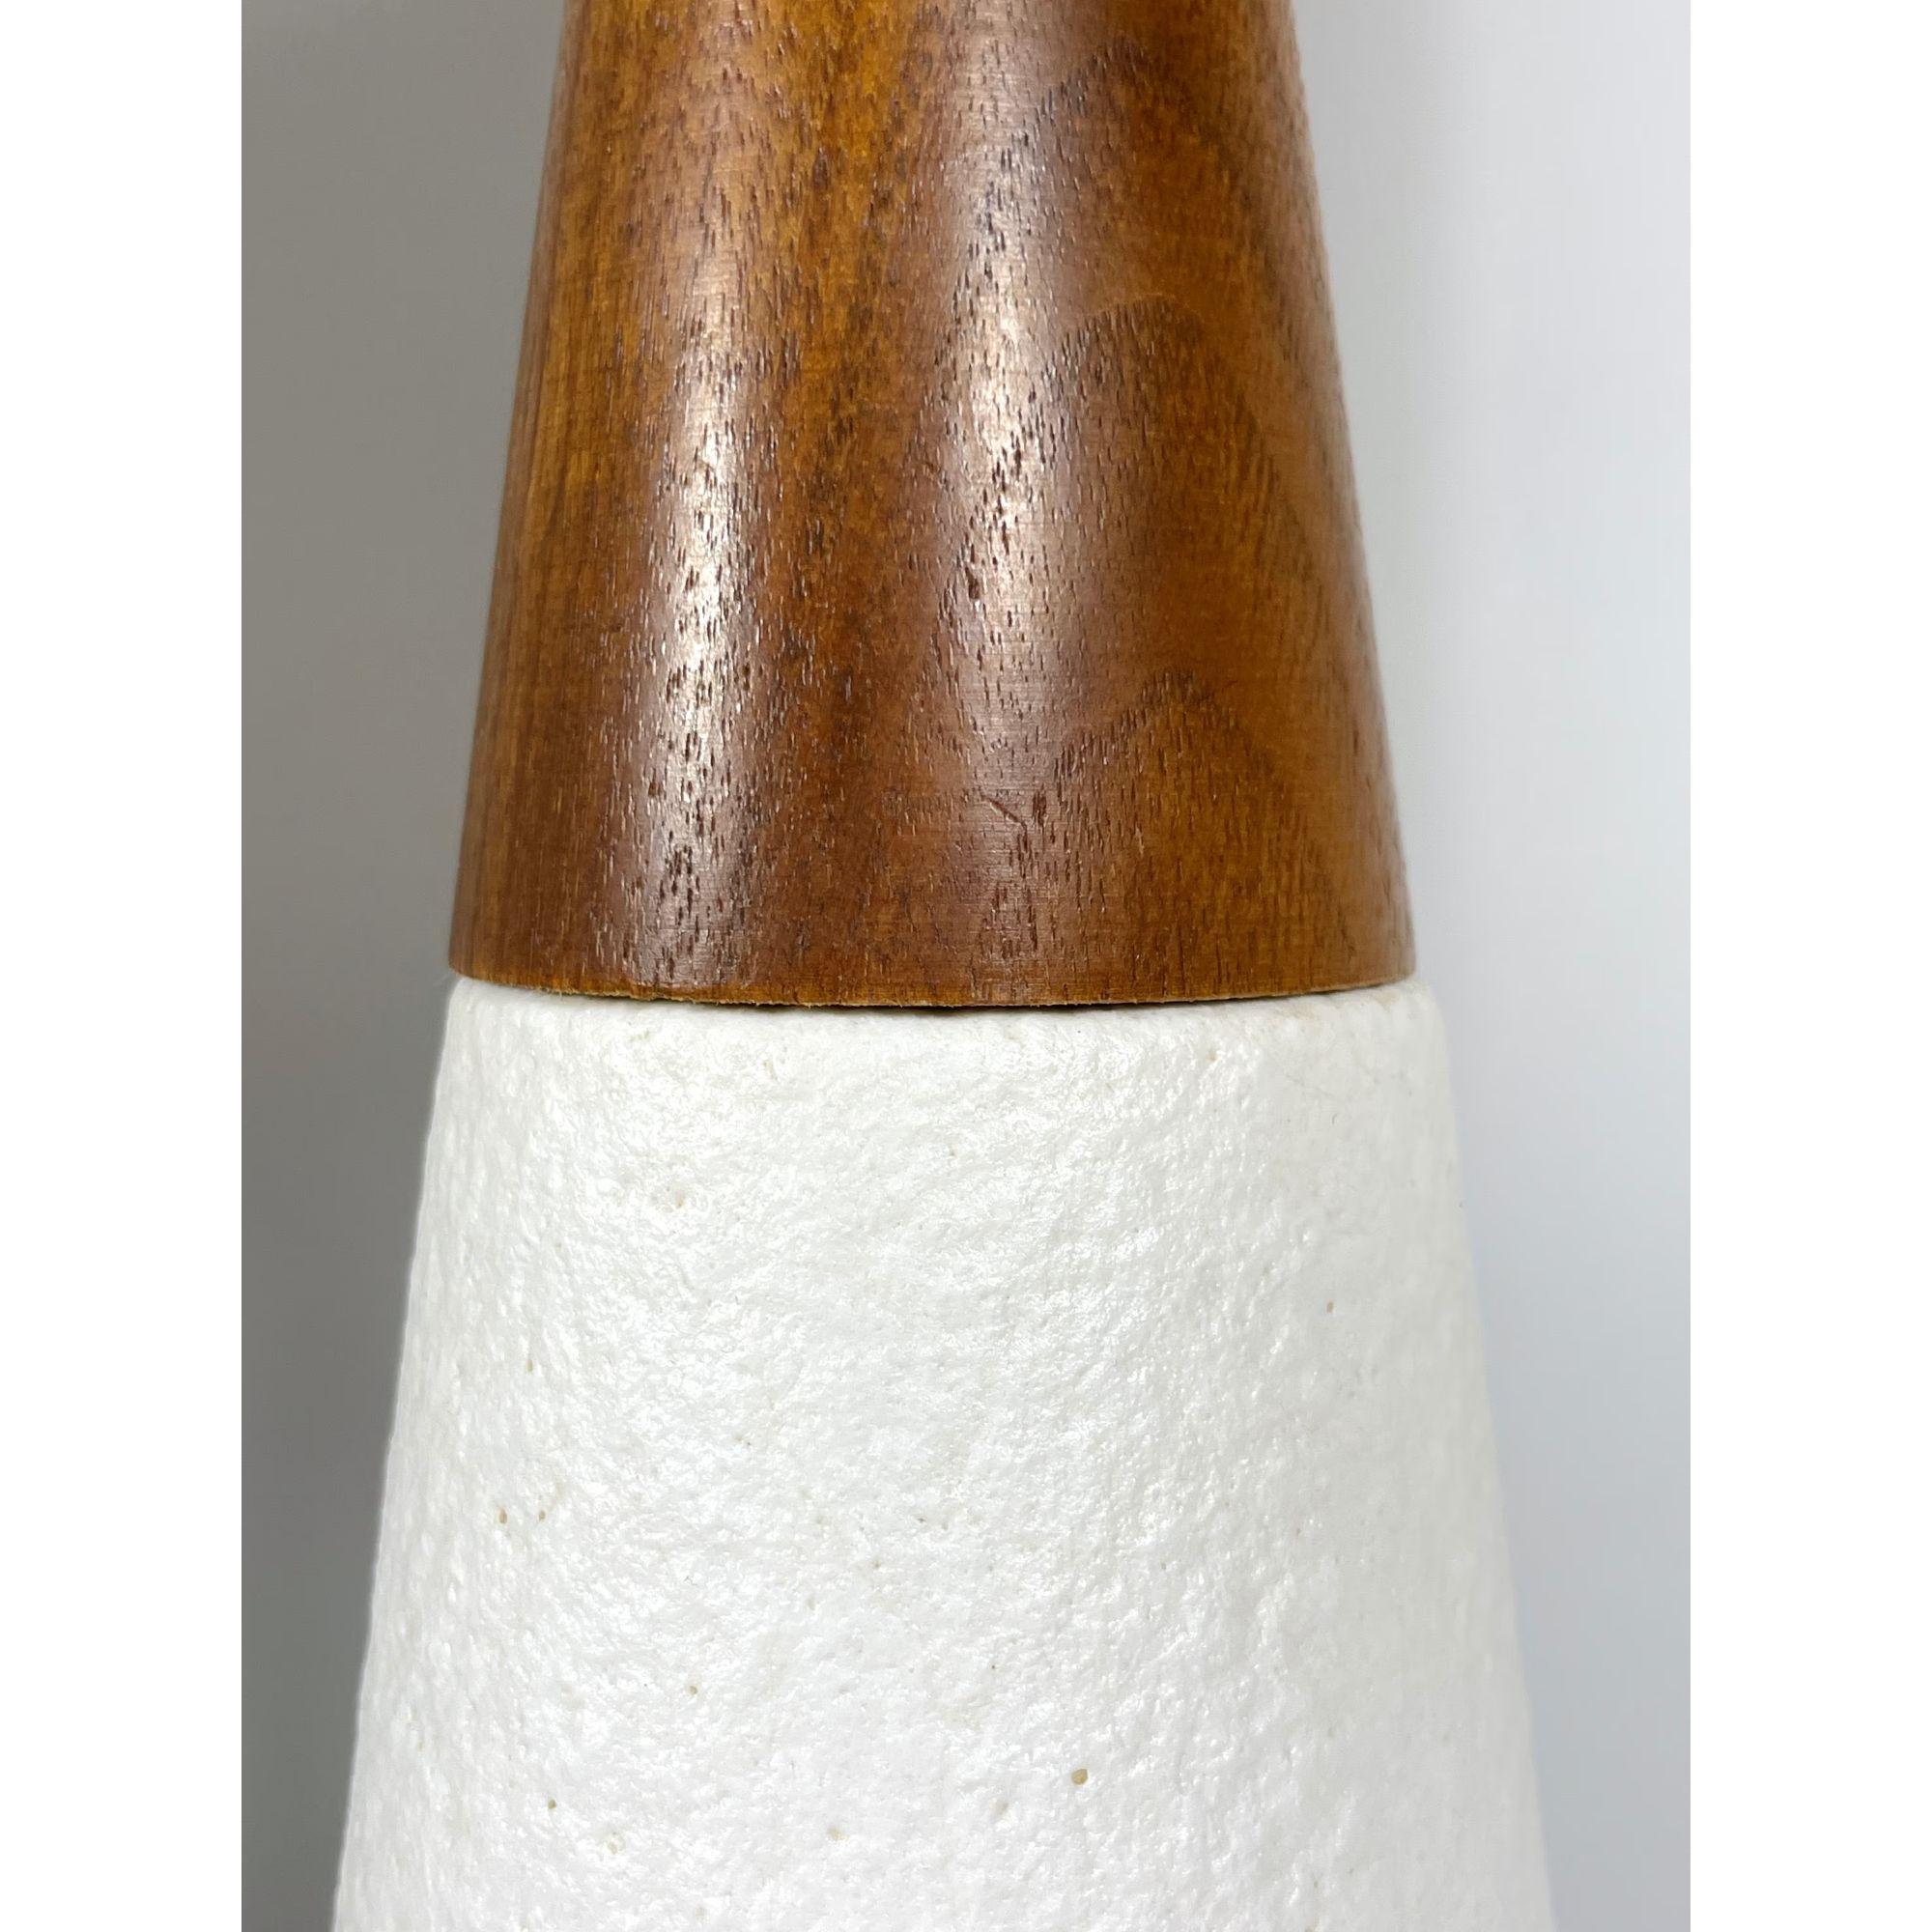 Mid Century Modern Vintage White Ceramic Cone Table Lamp, circa 1960s For Sale 3